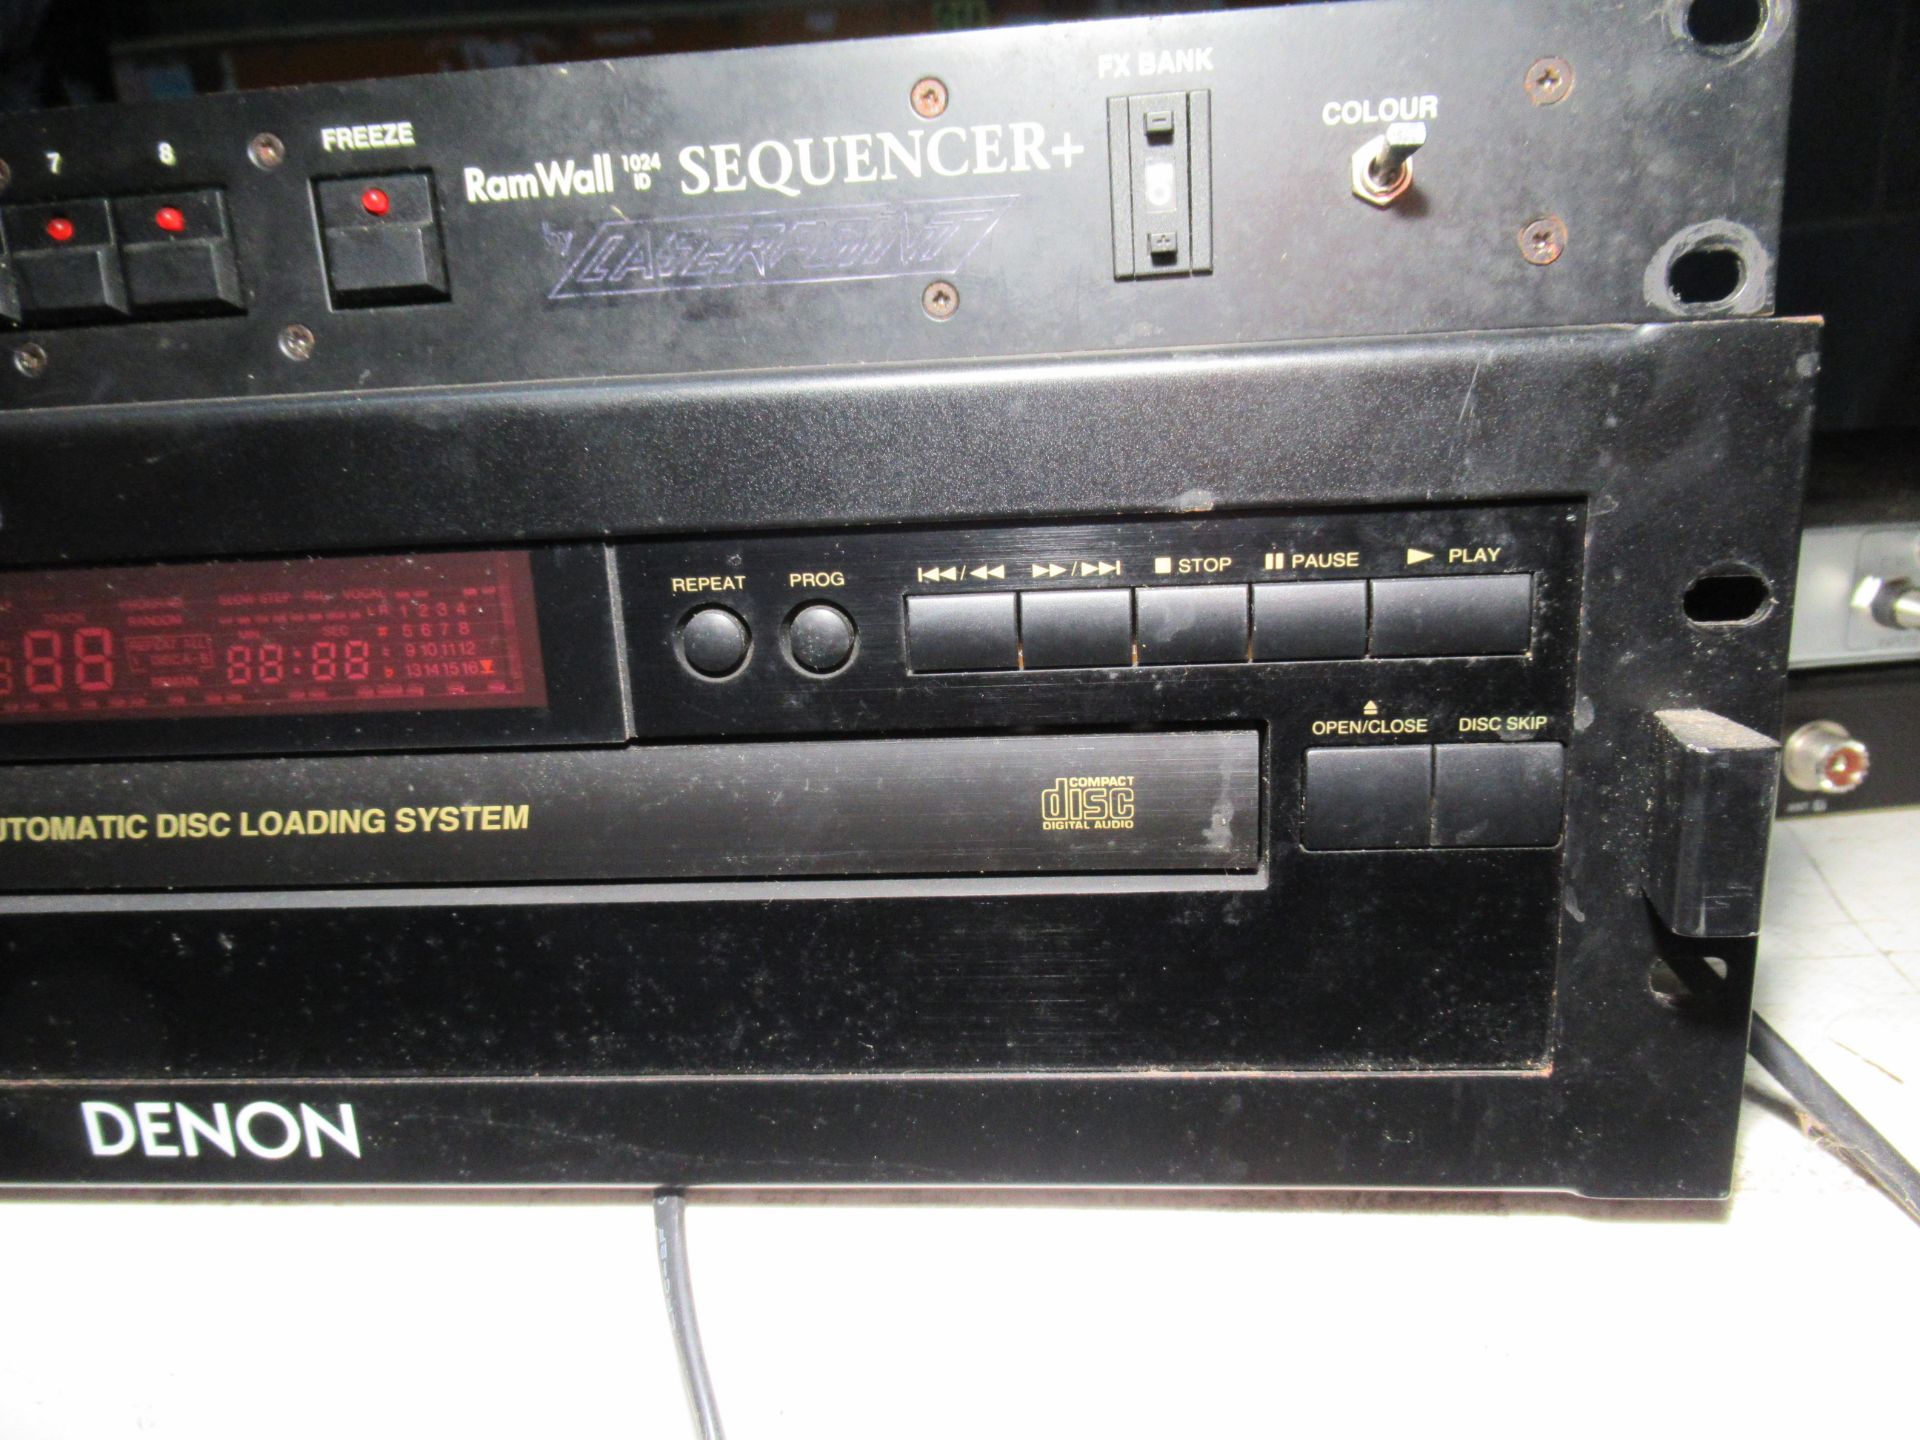 Denon DCM-270 5 Disc CD Player, Ram Wall 1042 Sequencer and a ELCA SR16 Super Regia Video Matrix Swi - Image 5 of 6